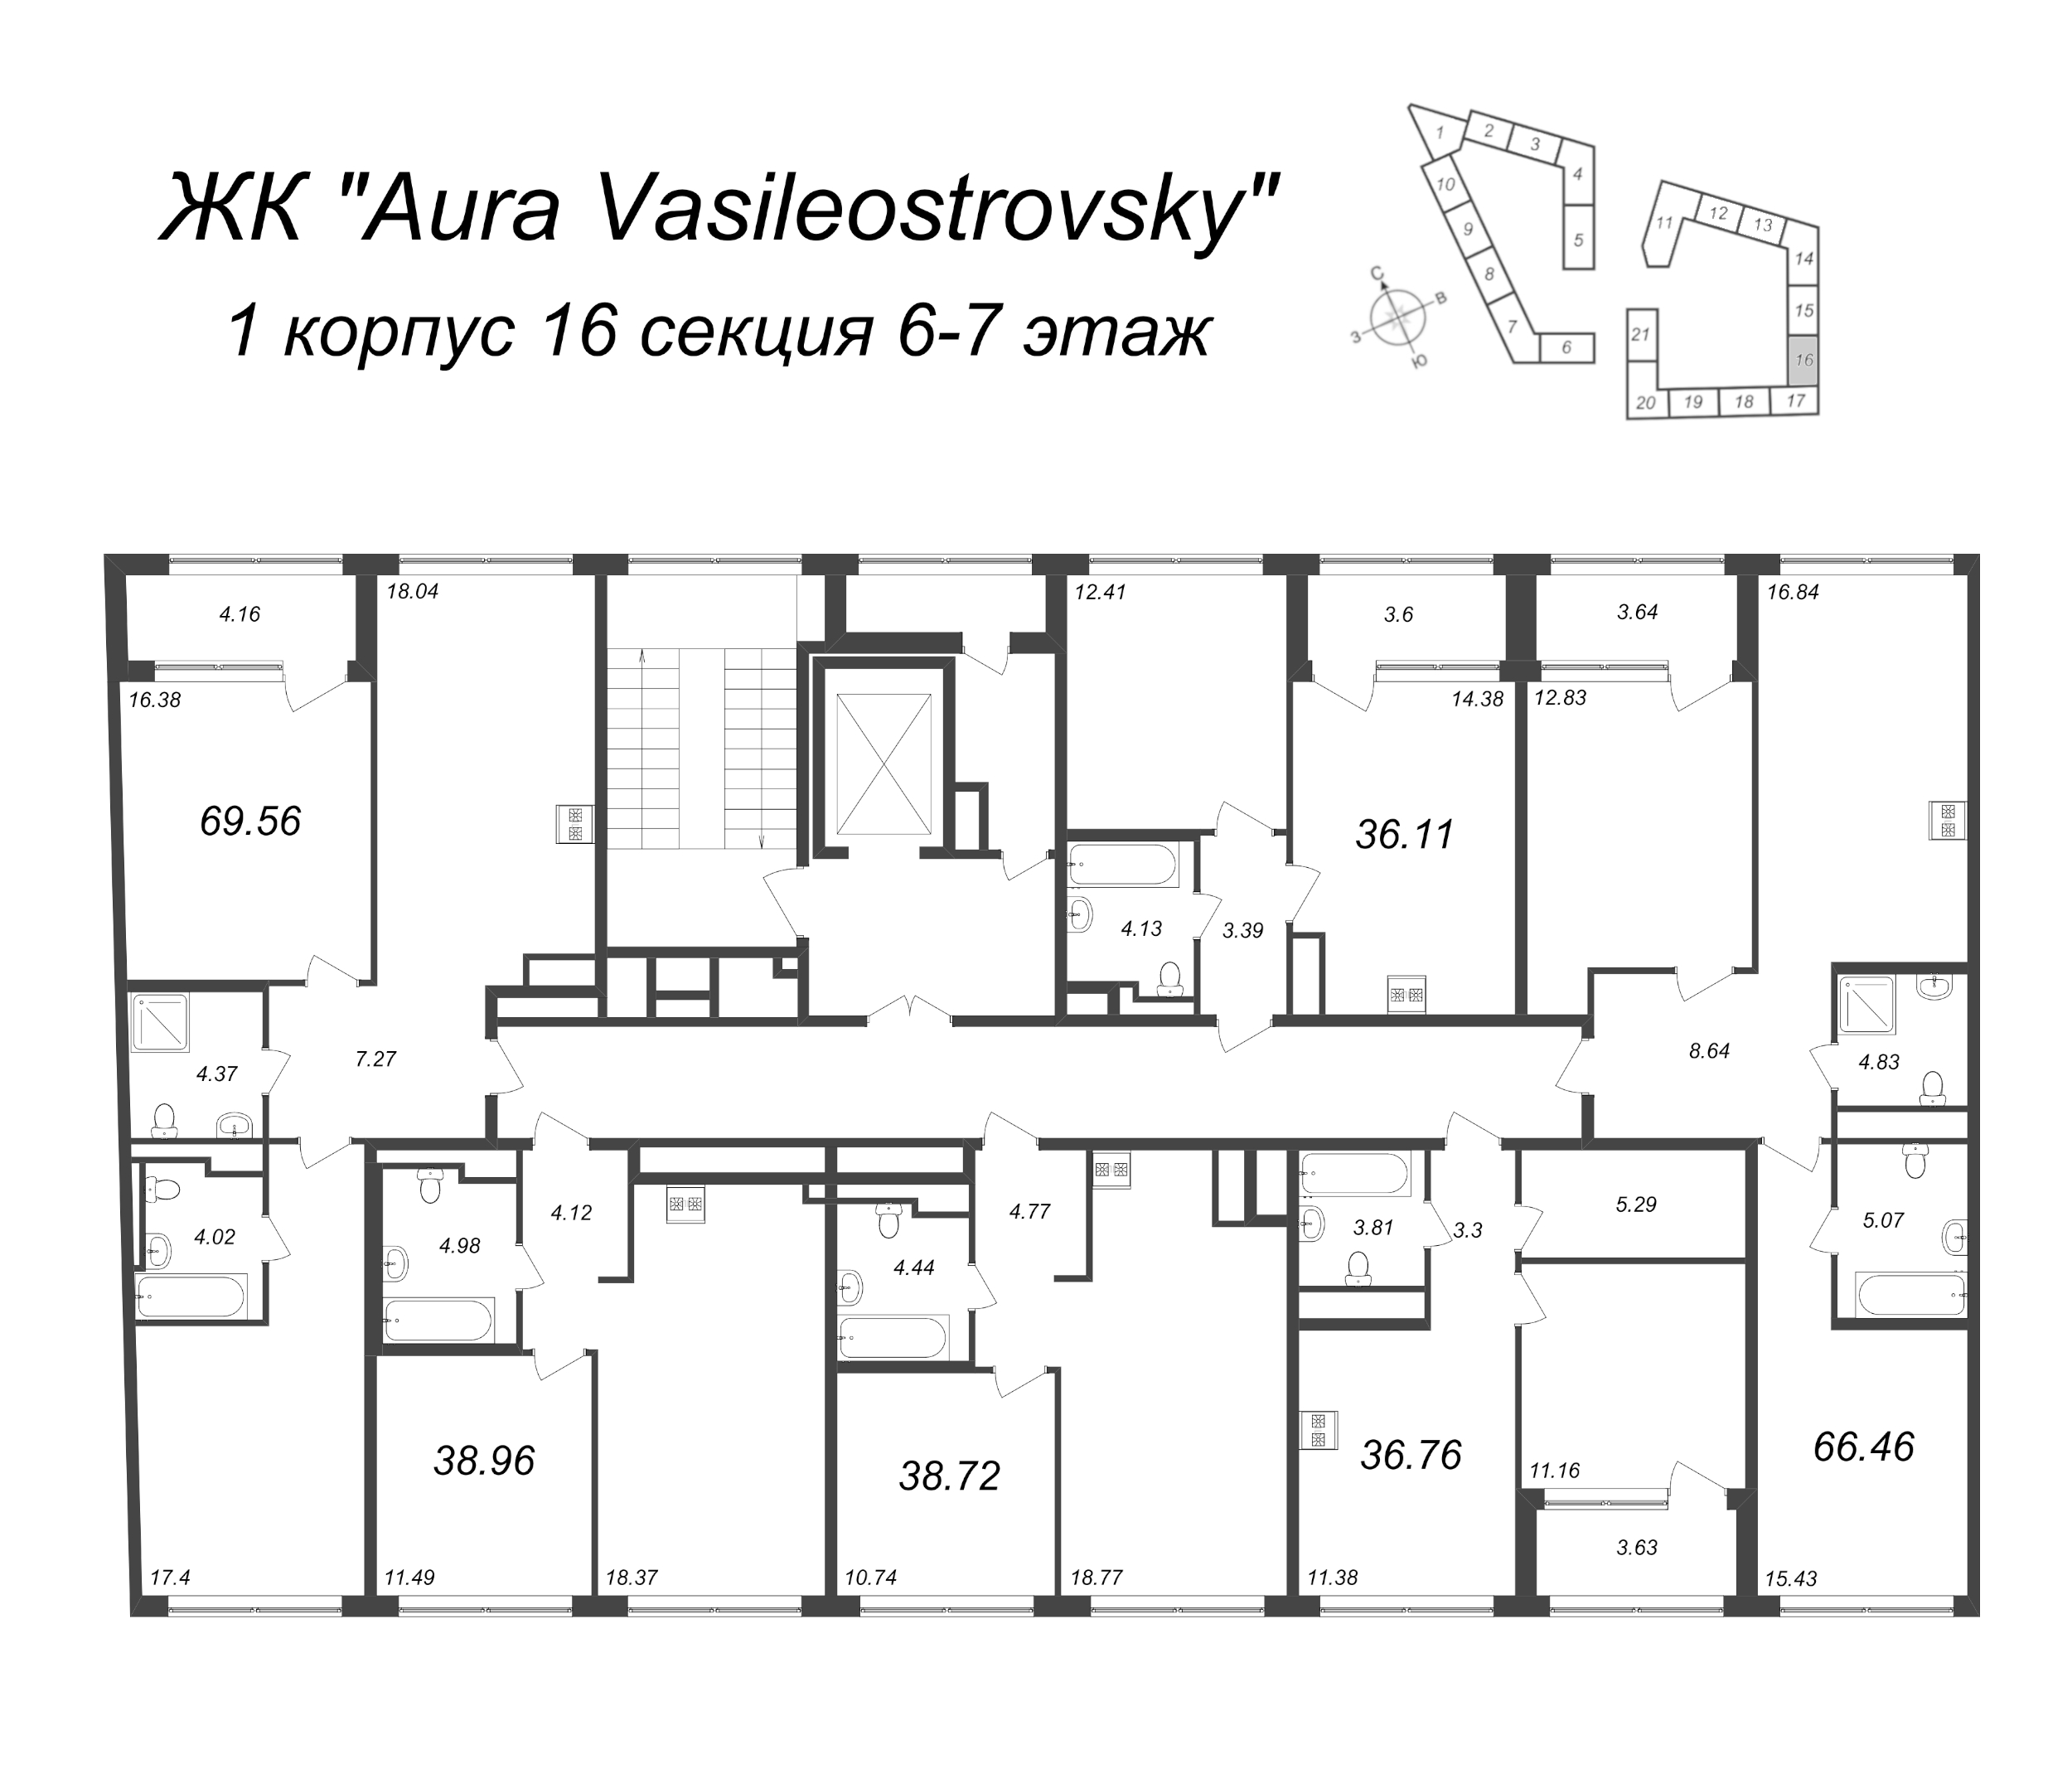 2-комнатная (Евро) квартира, 38.72 м² - планировка этажа